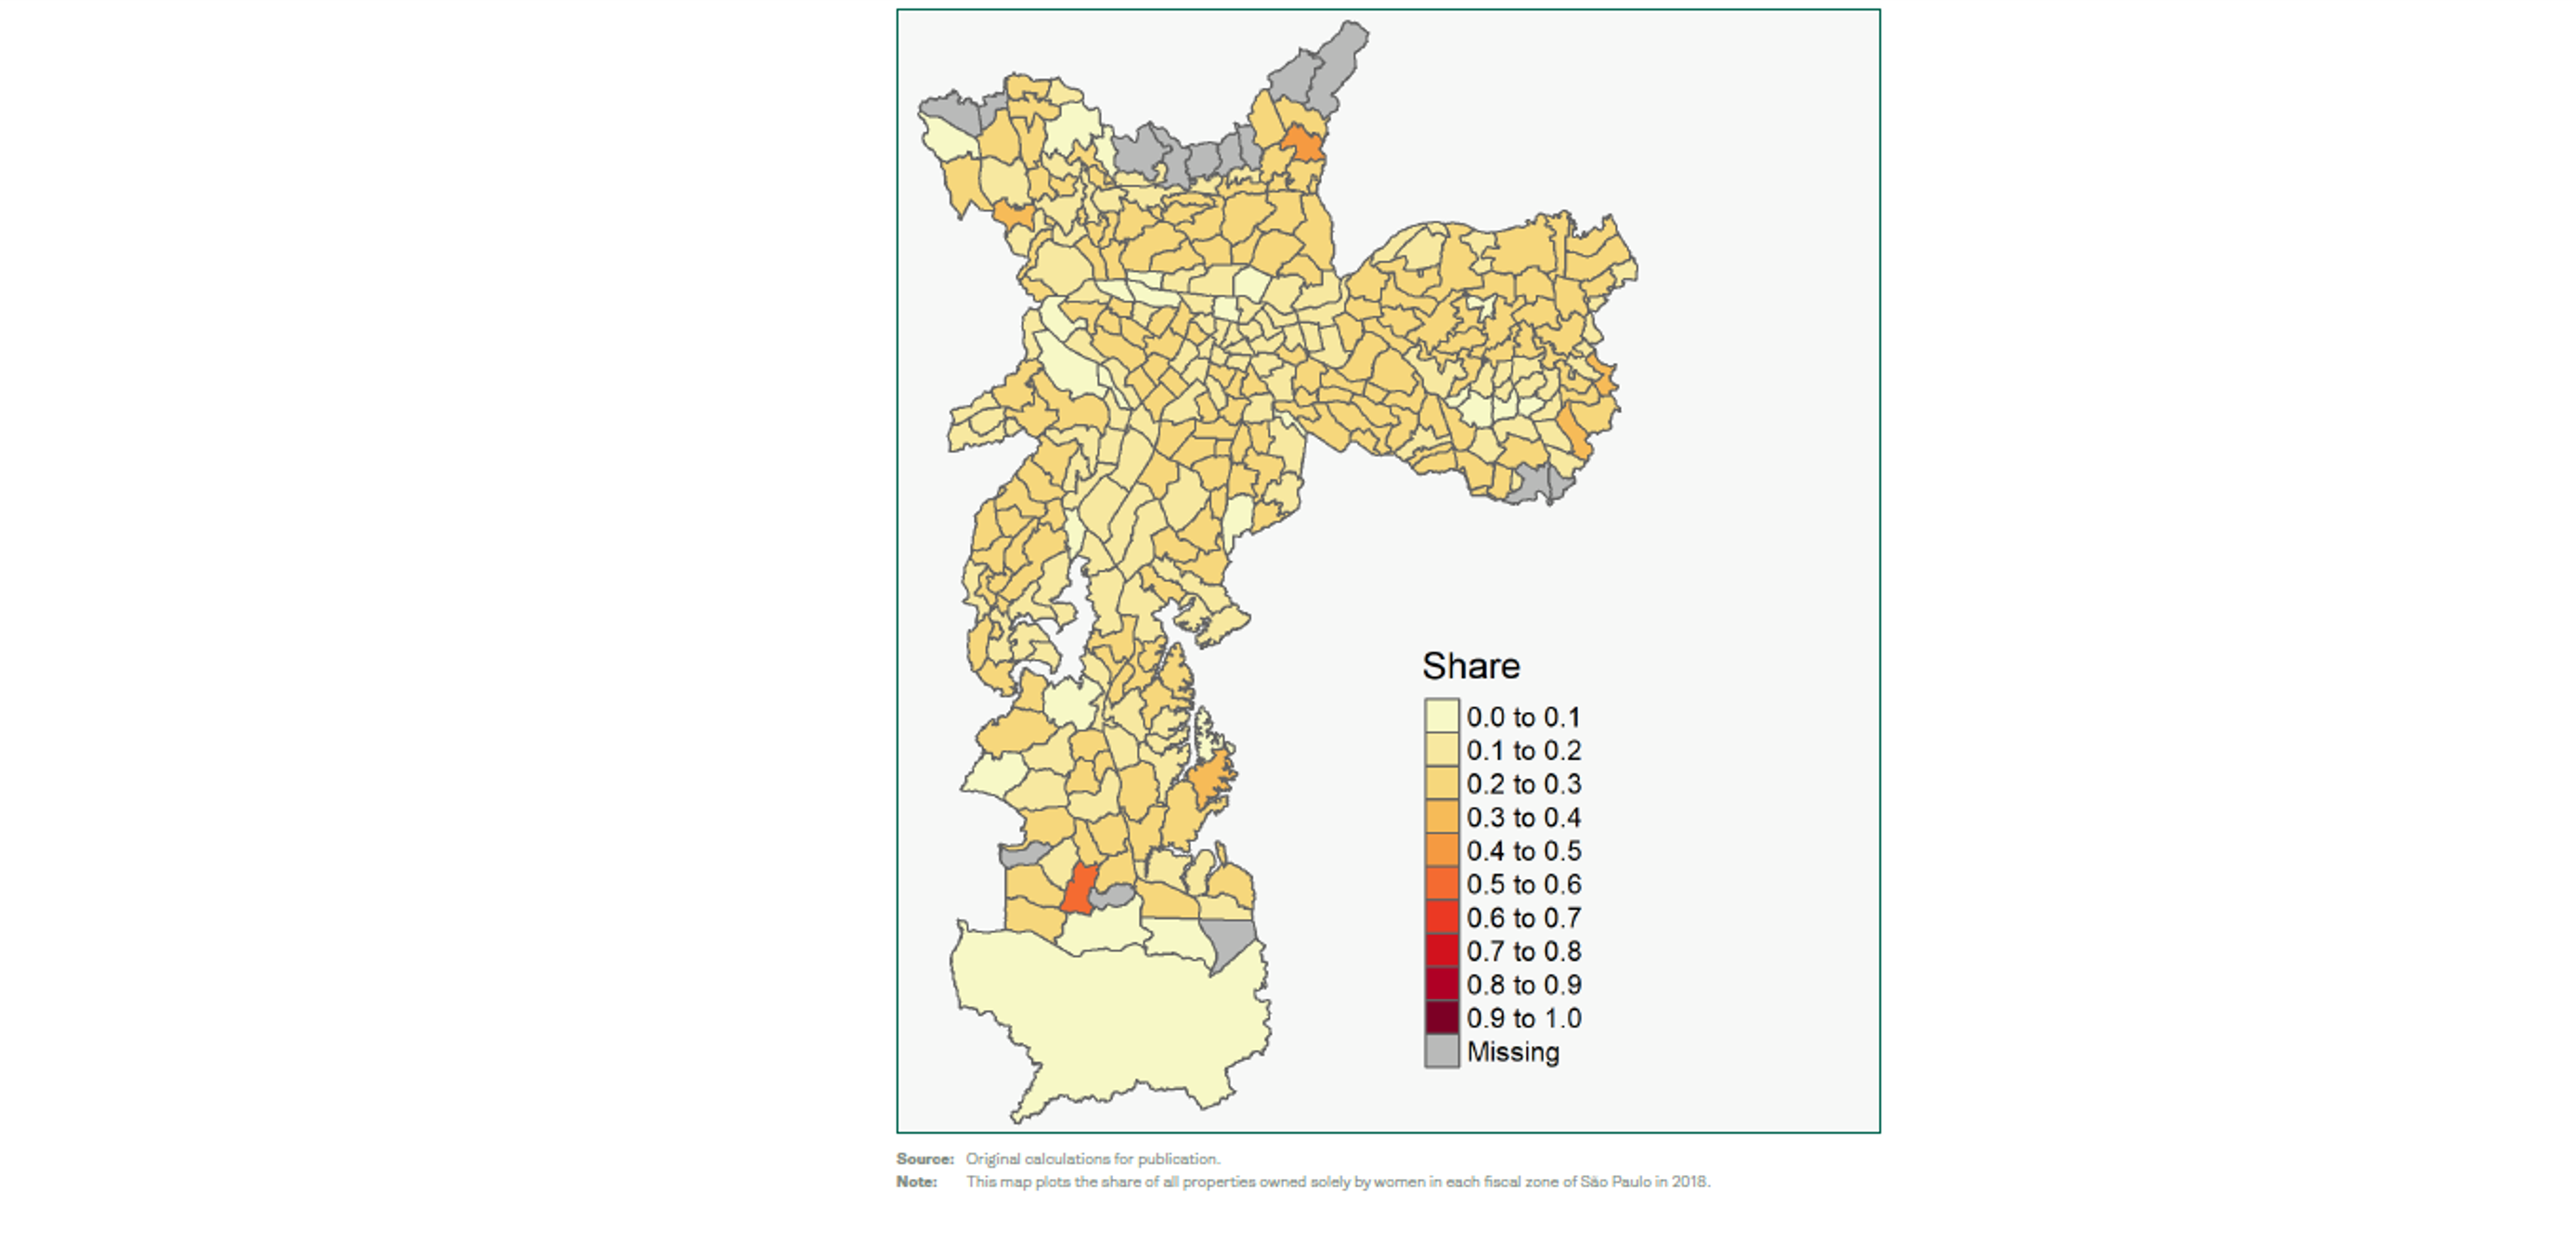 Women own approximately 30 percent of properties across Sao Paulo, Brazil